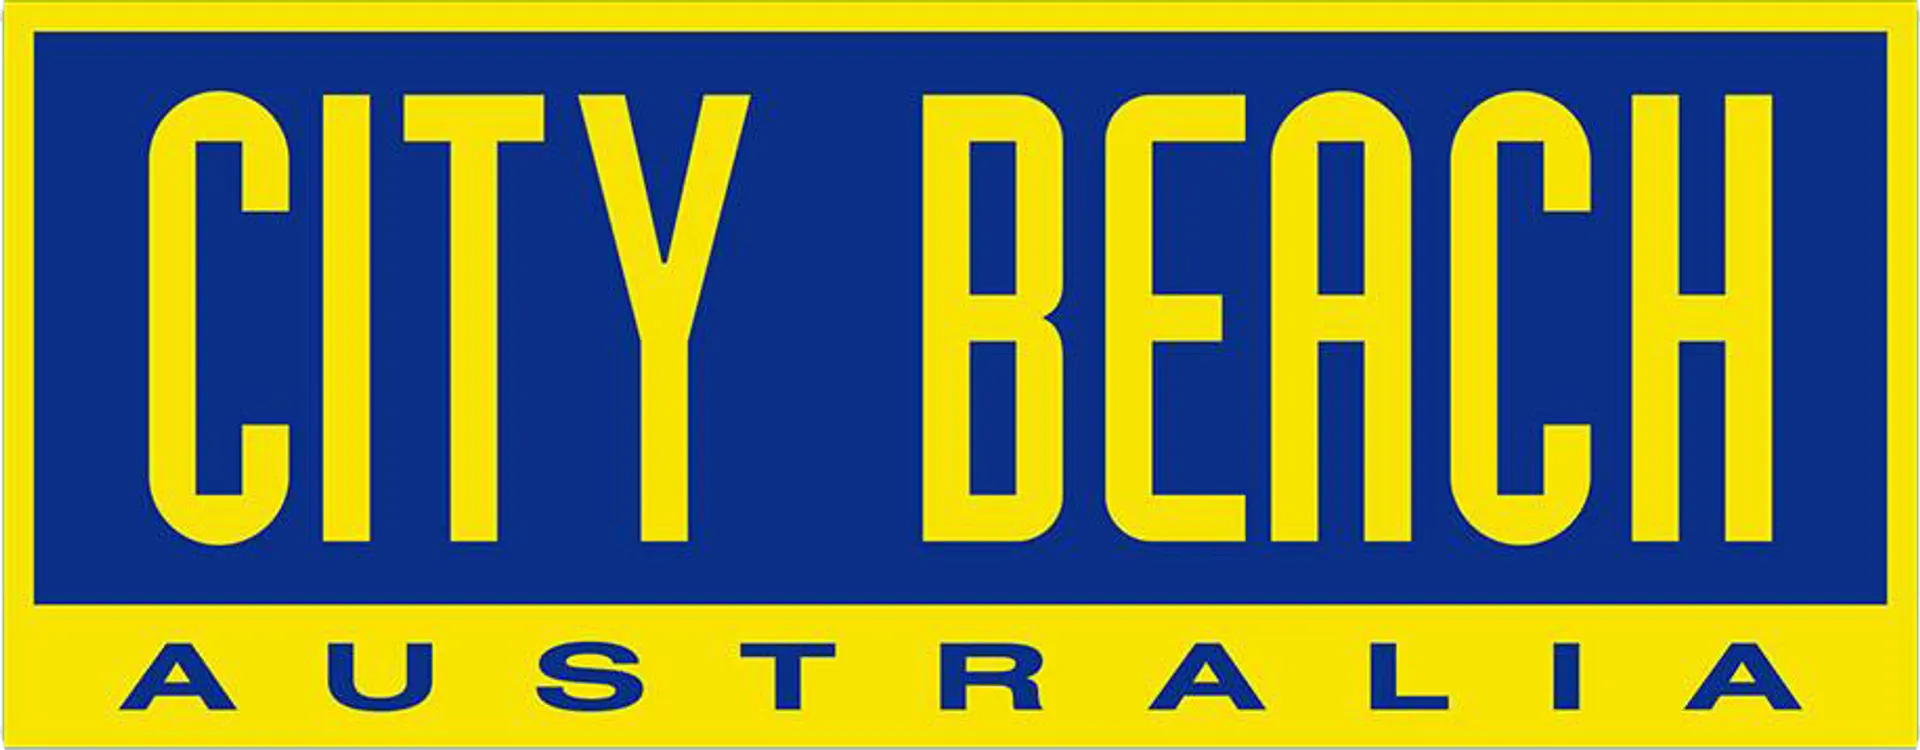 CITY BEACH logo of current flyer